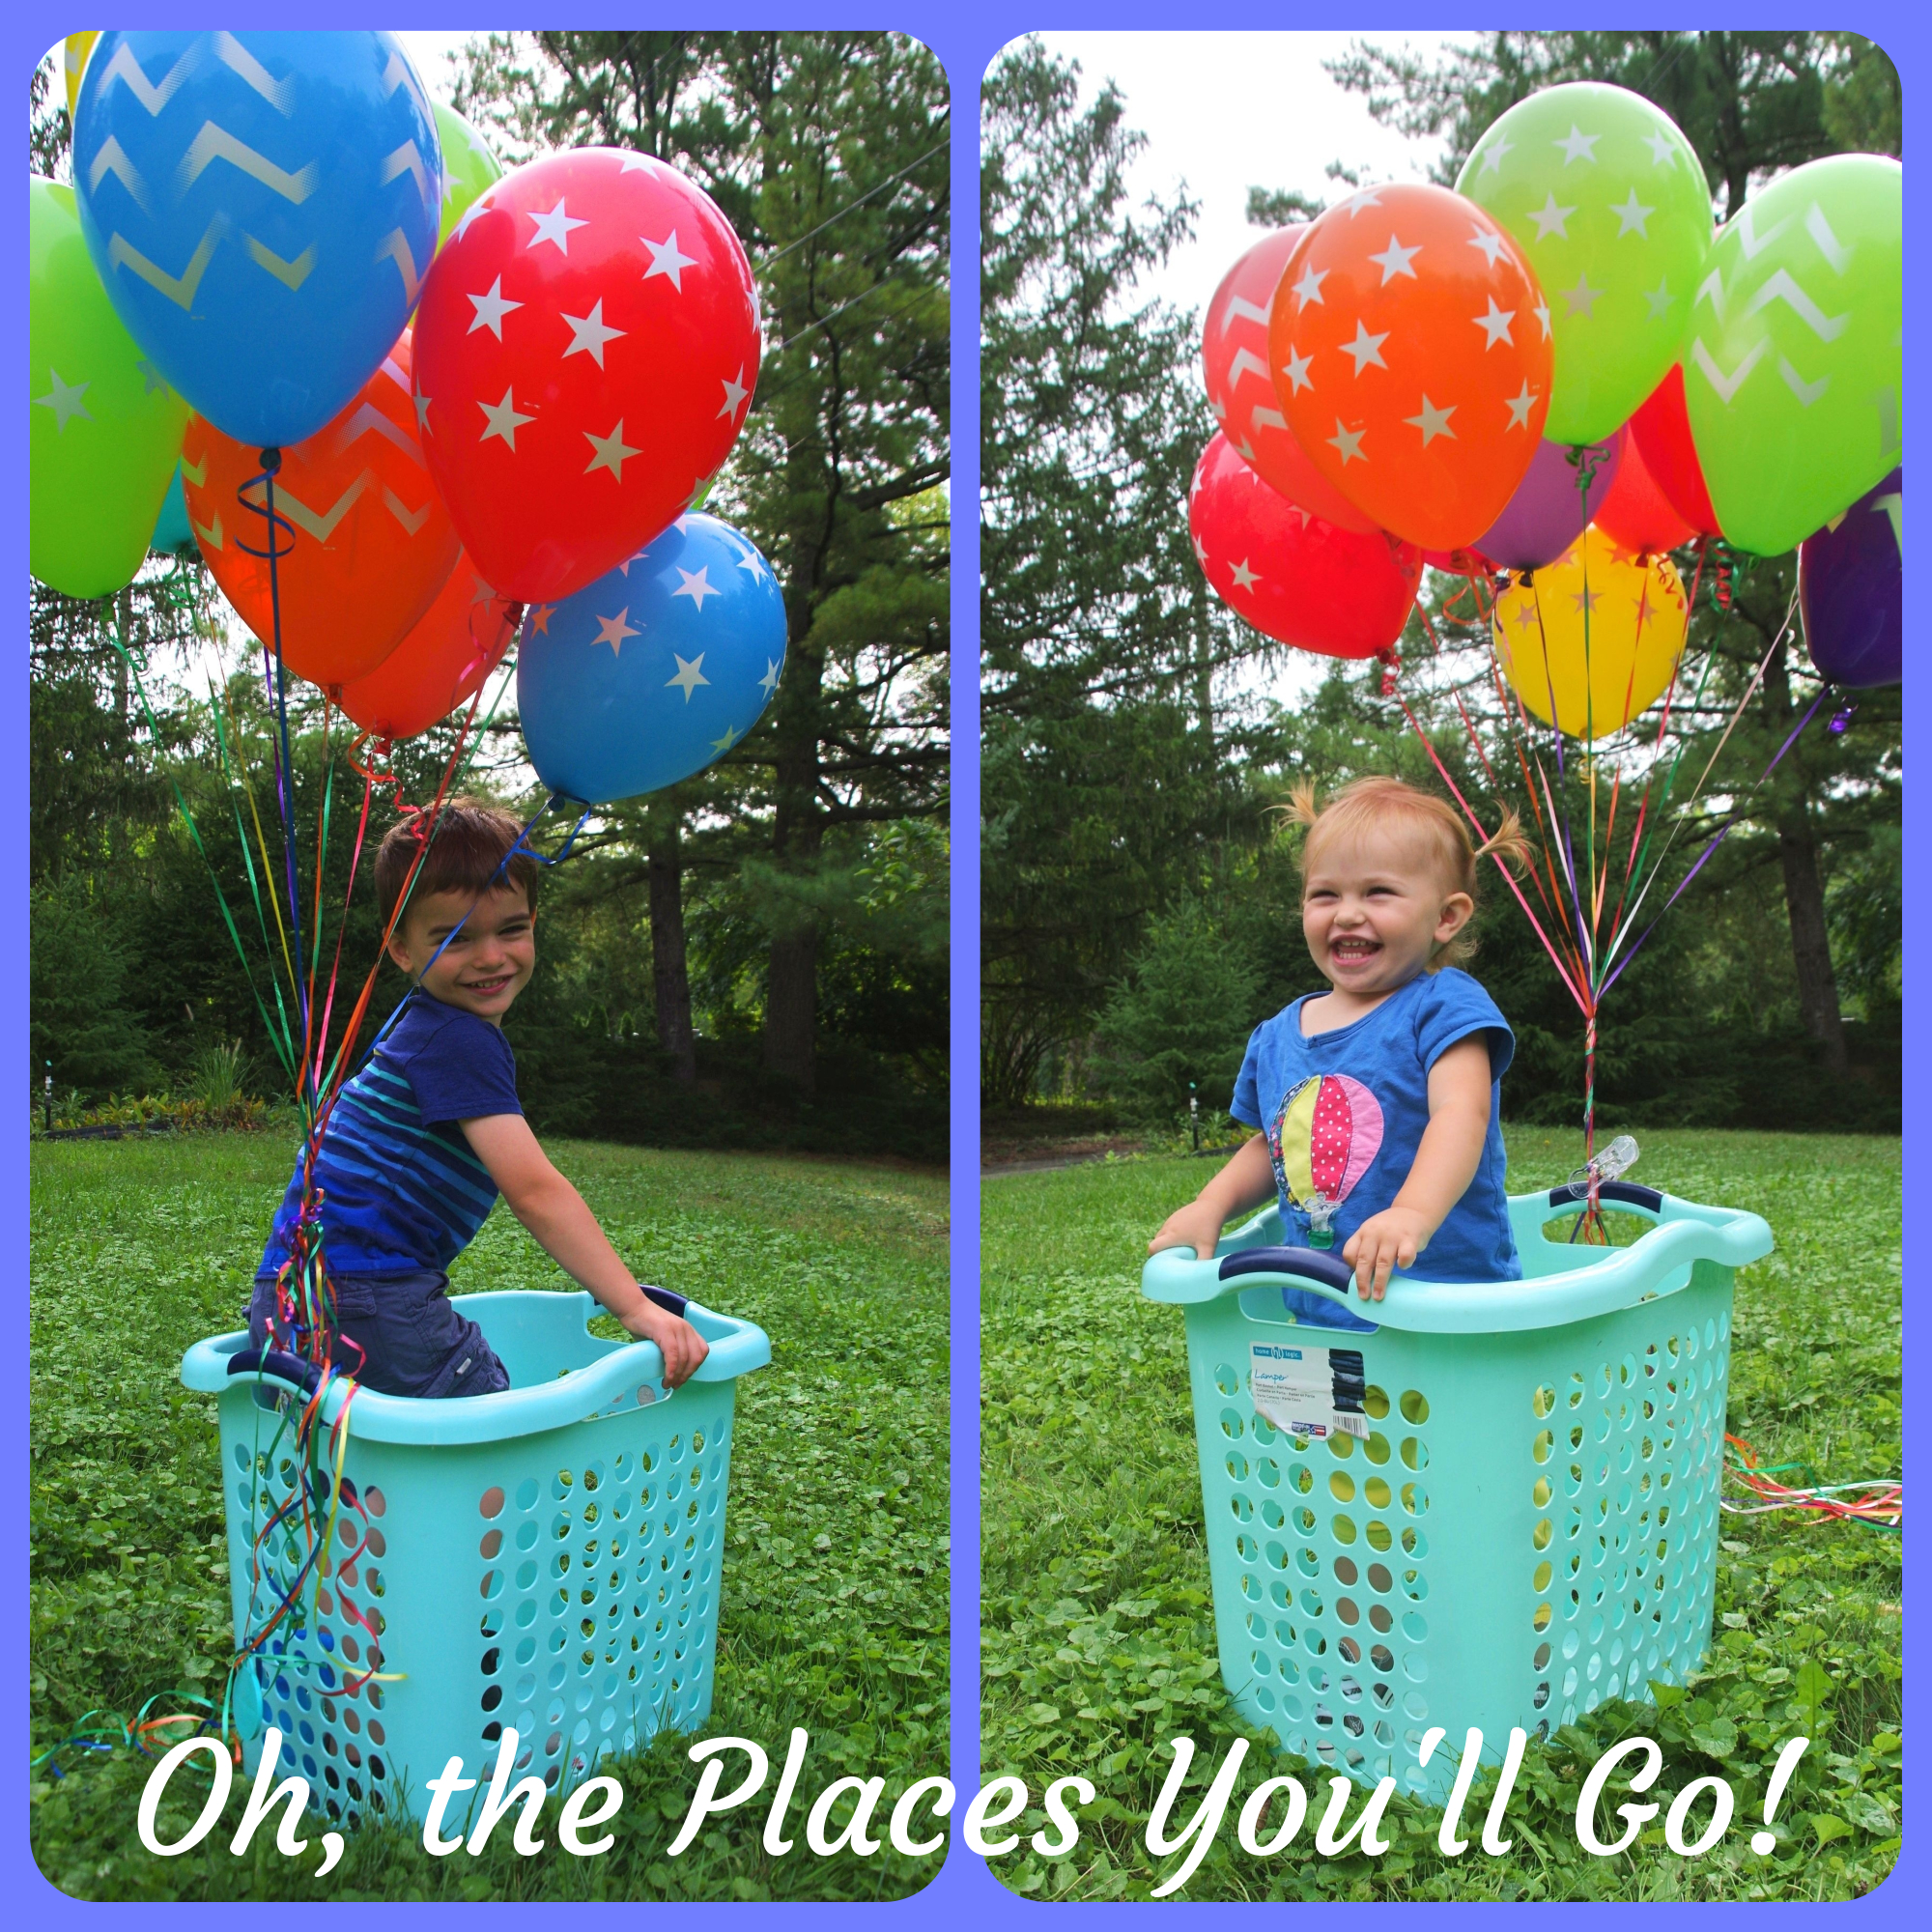 Pretend hot air balloon with preschoolers in basket